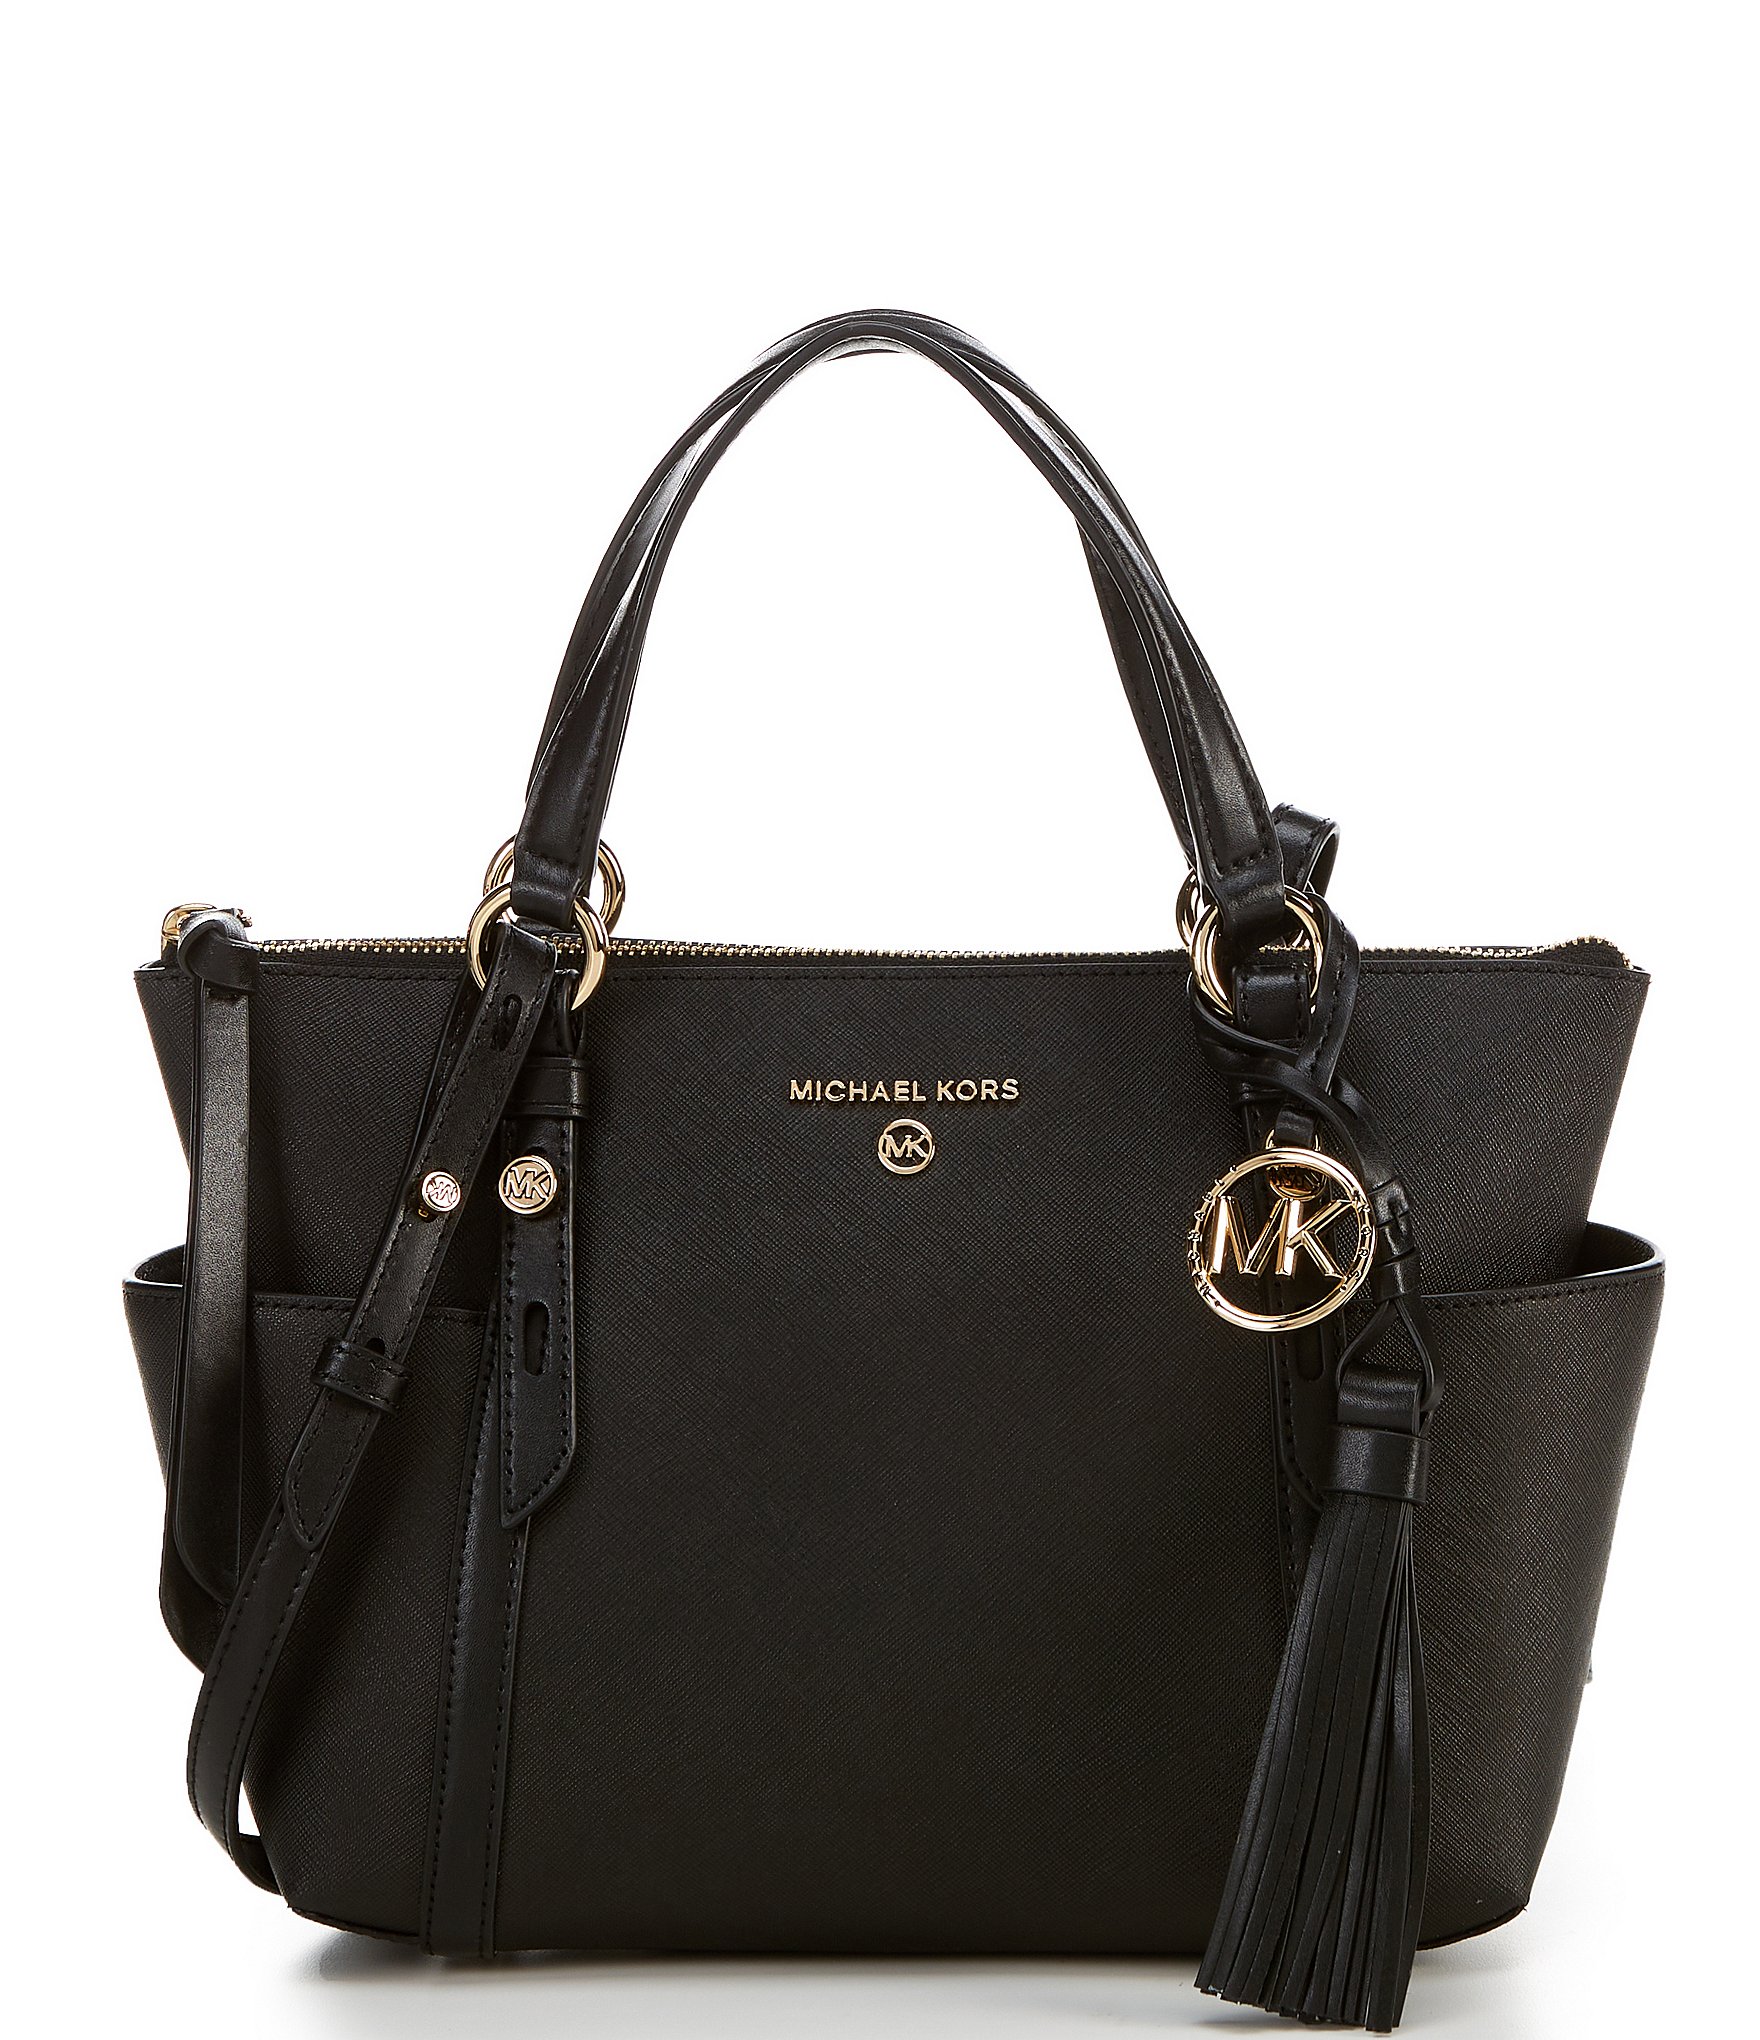 MK black and brown purse